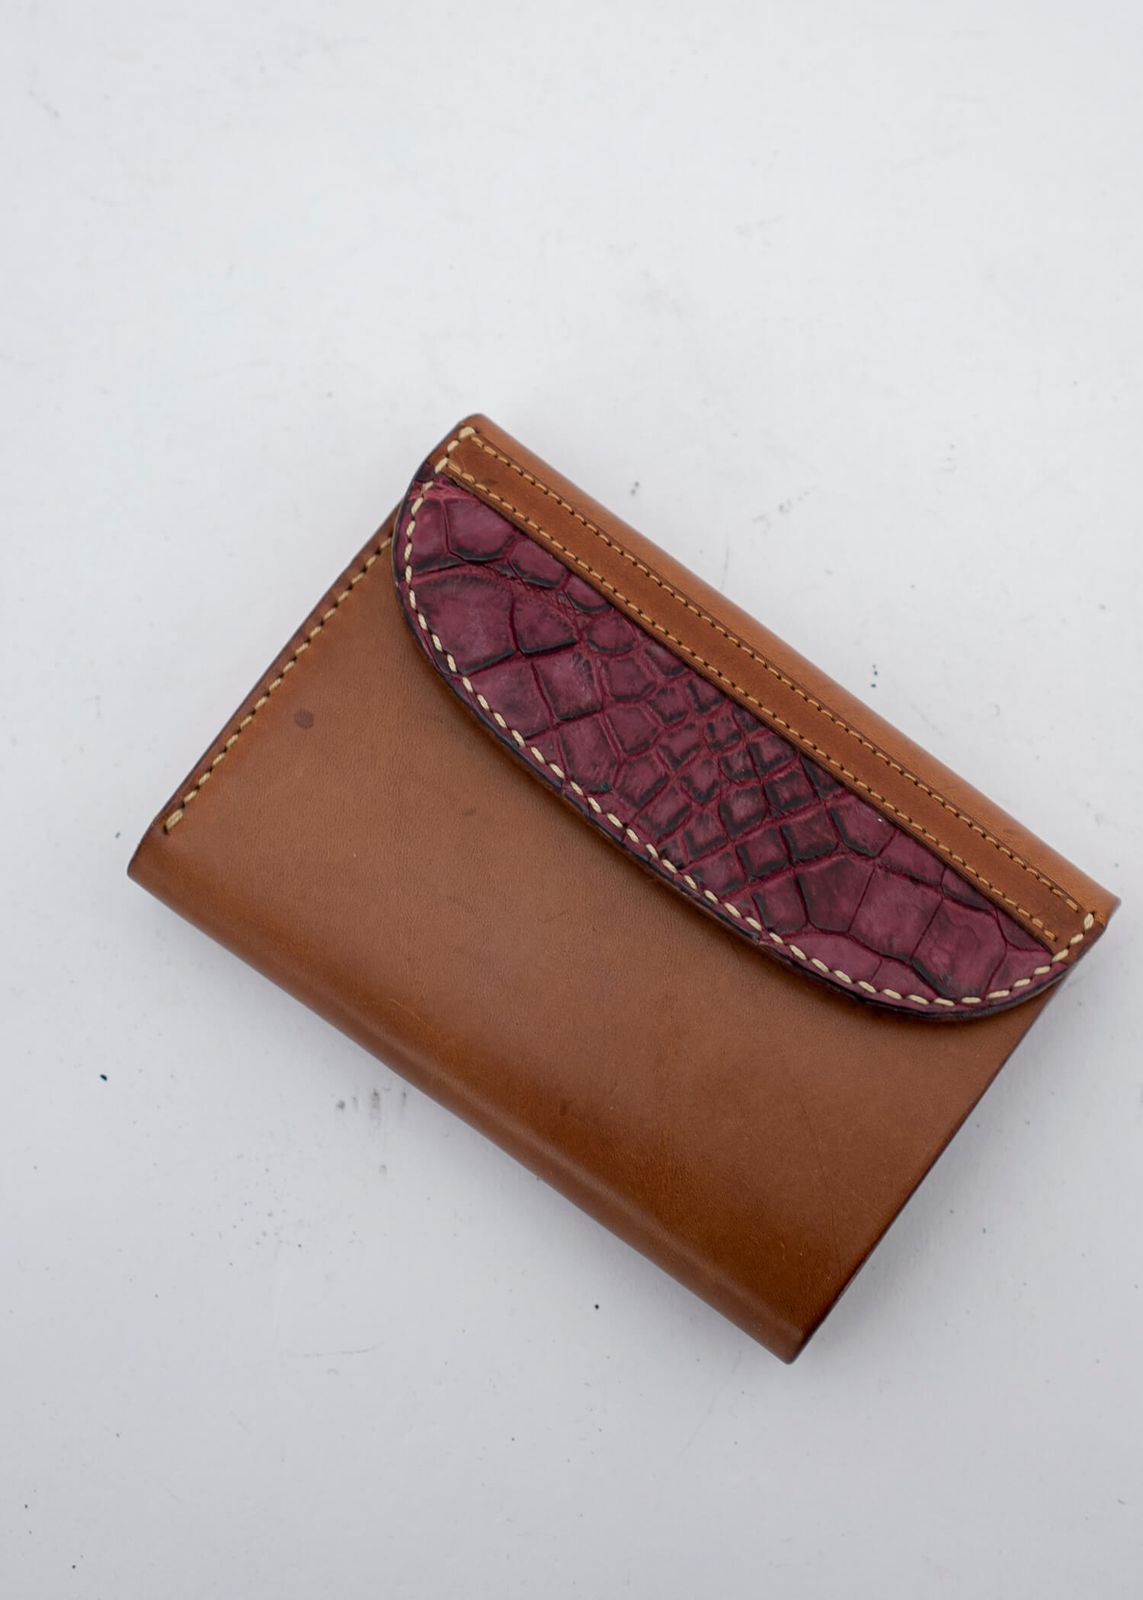 MOTO/モト クロコダイル レザー財布 ピンク 二つ折り財布 中古 - メルカリ